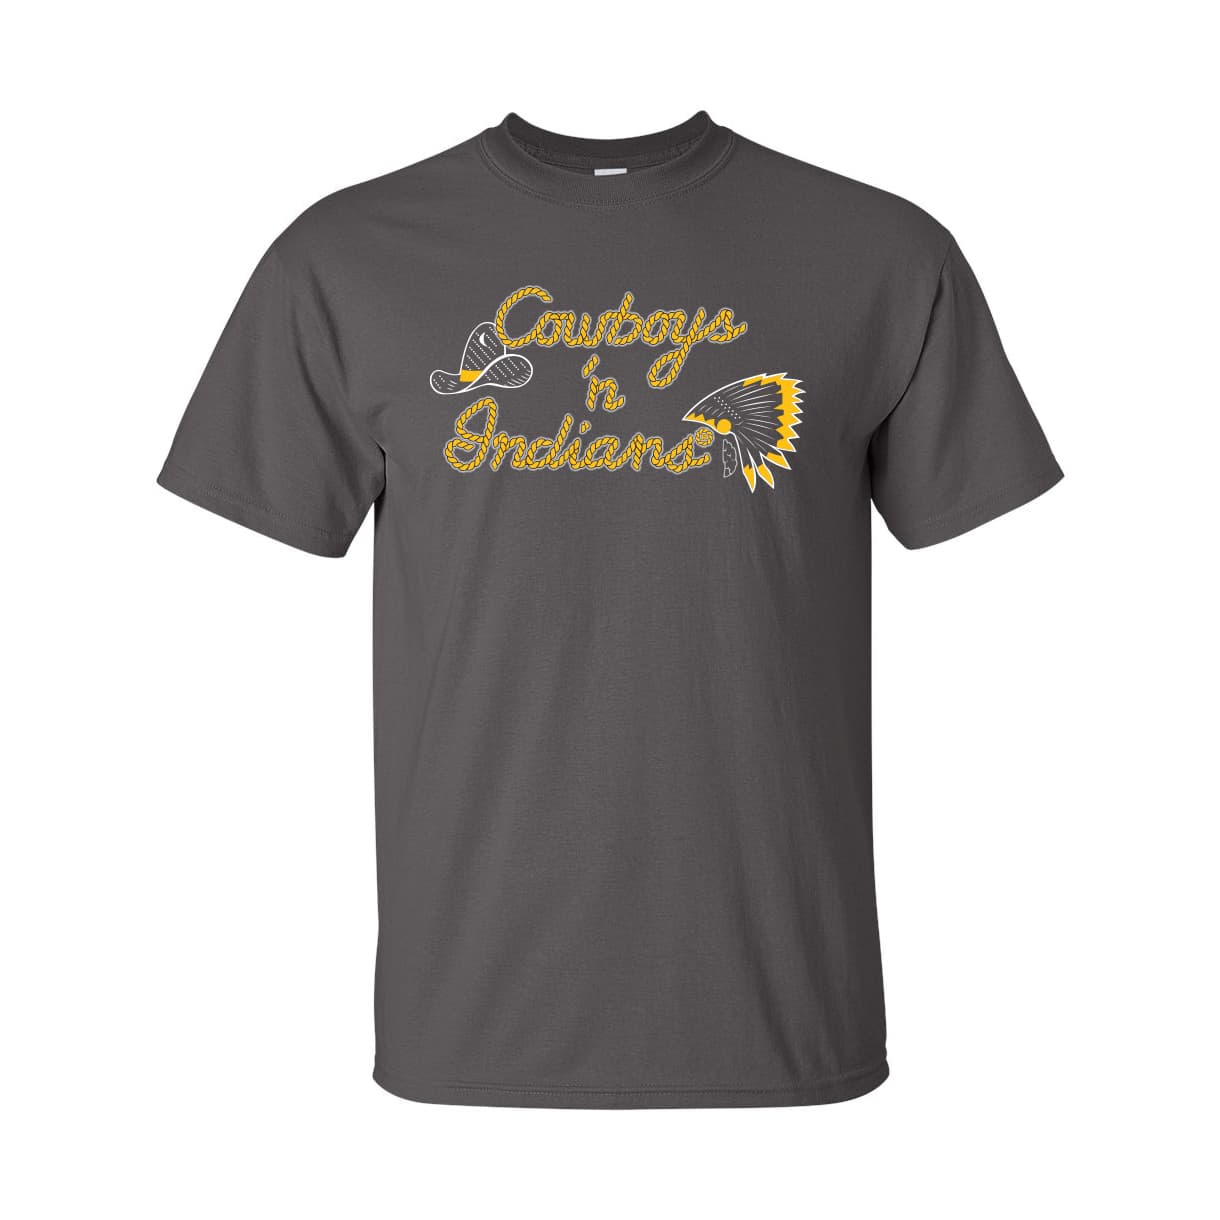 Cowboys n' Indians T-Shirt | Yellowstone Press